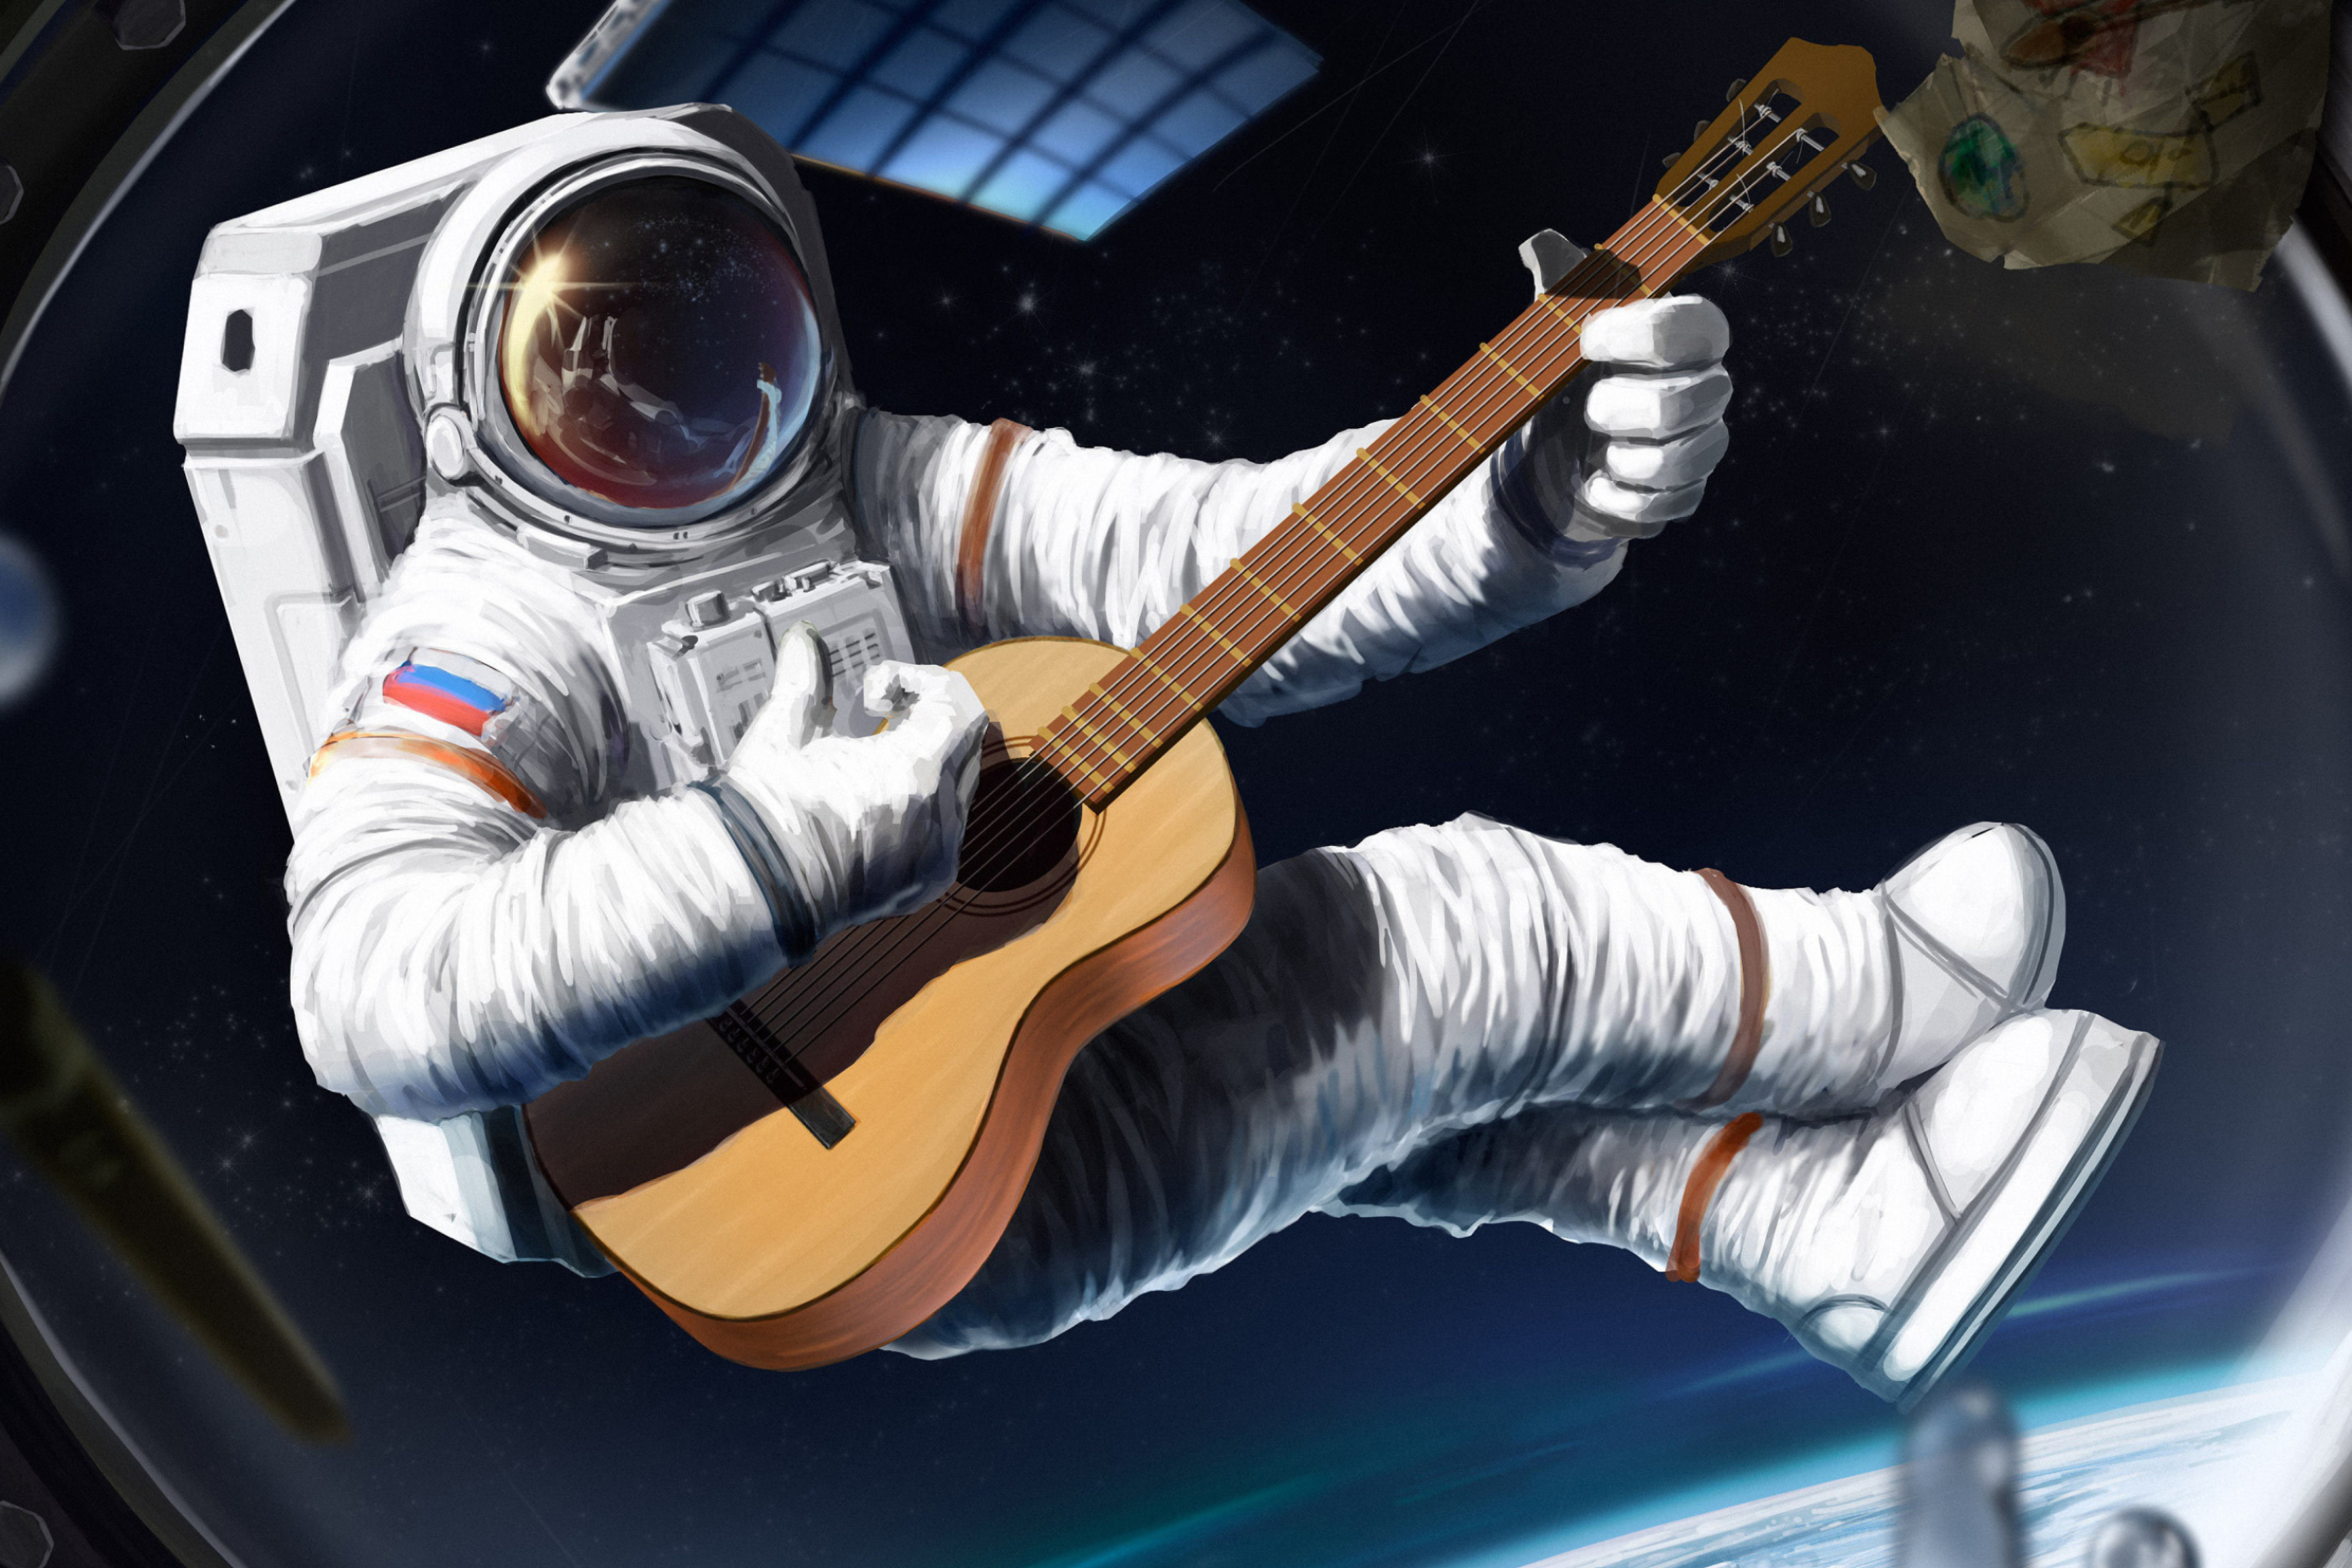 Spaceman перевод. Космонавт арт. Космонавт с гитарой в космосе. Космонавт картинка. Космонавт в космосе арт.